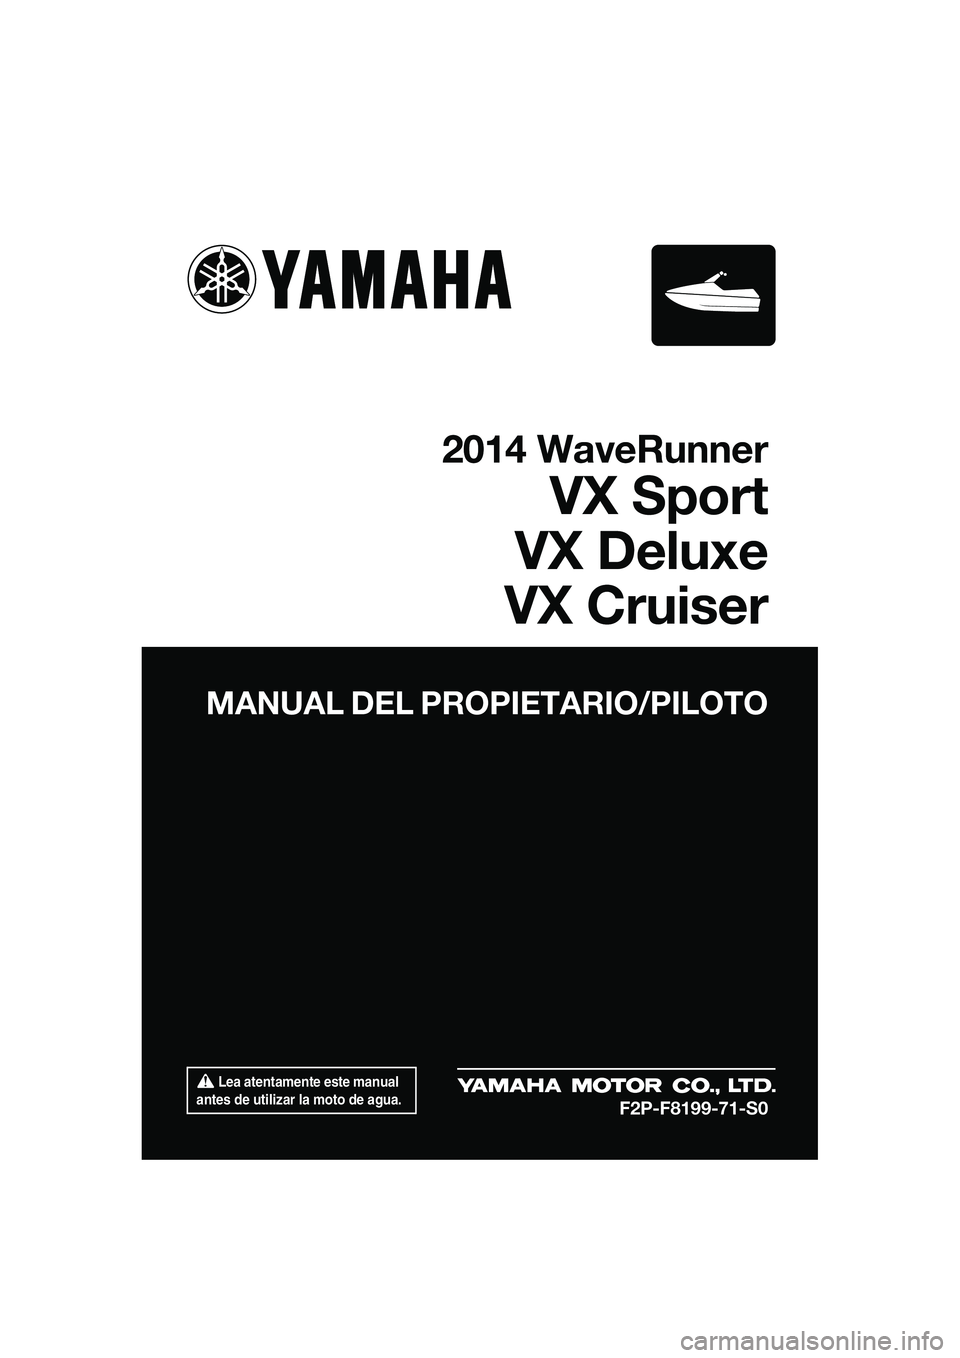 YAMAHA VX DELUXE 2014  Manuale de Empleo (in Spanish)  Lea atentamente este manual 
antes de utilizar la moto de agua.
MANUAL DEL PROPIETARIO/PILOTO
2014 WaveRunner
VX Sport
VX Deluxe
VX Cruiser
F2P-F8199-71-S0
UF2P71S0.book  Page 1  Wednesday, July 10, 